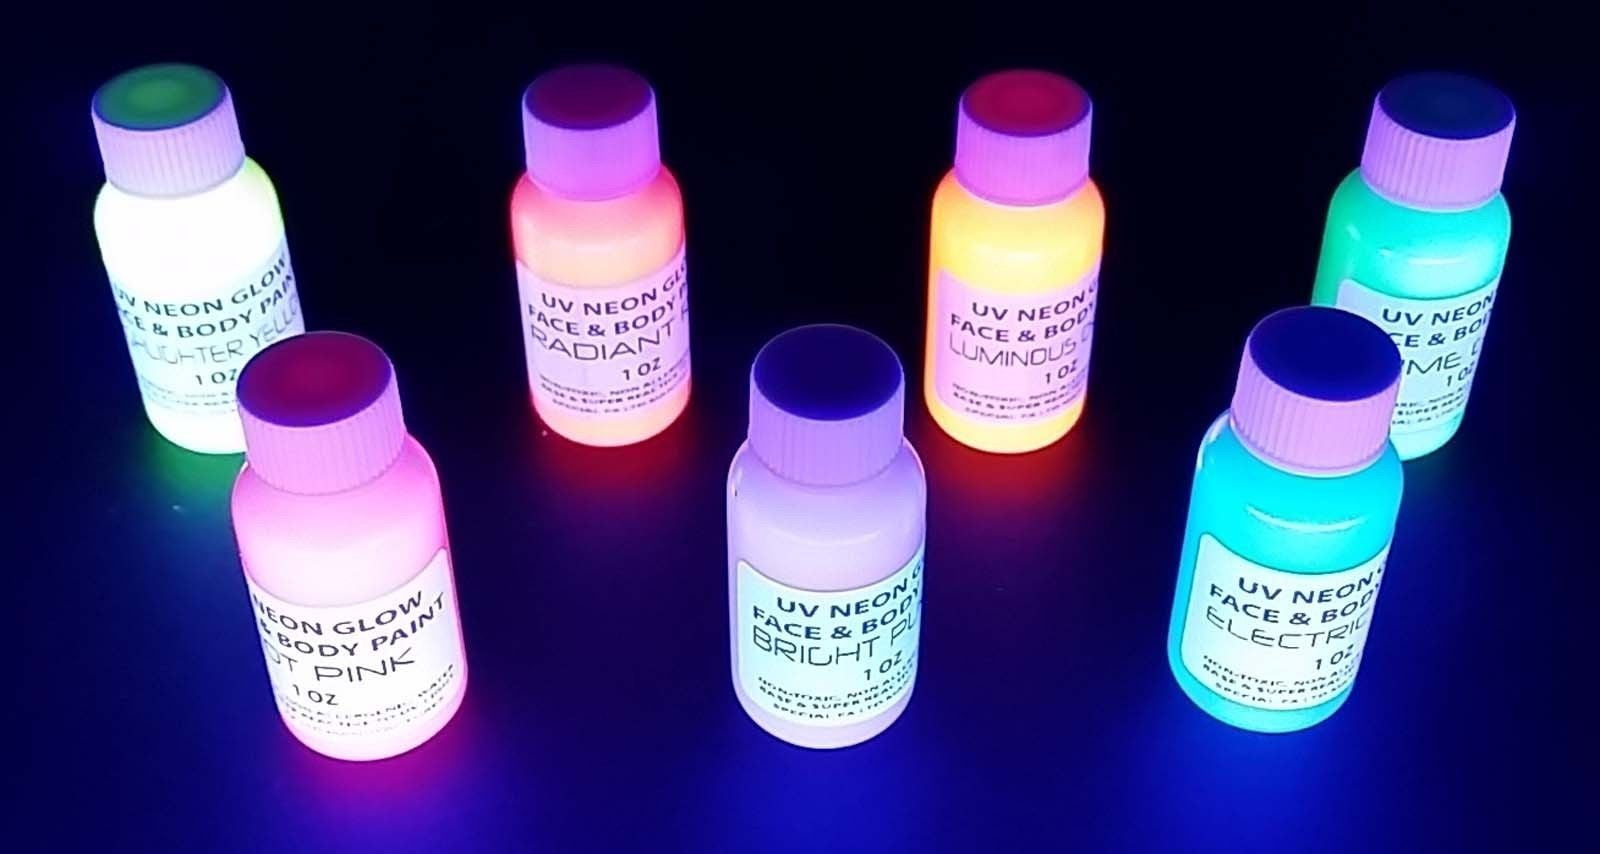 Midnight Glo UV Neon Face & Body Paint Glow Kit (7 Bottles 2 oz. Each)  Black Light Reactive Fluorescent Paint - Safe, Washes Off Skin, Non-Toxic